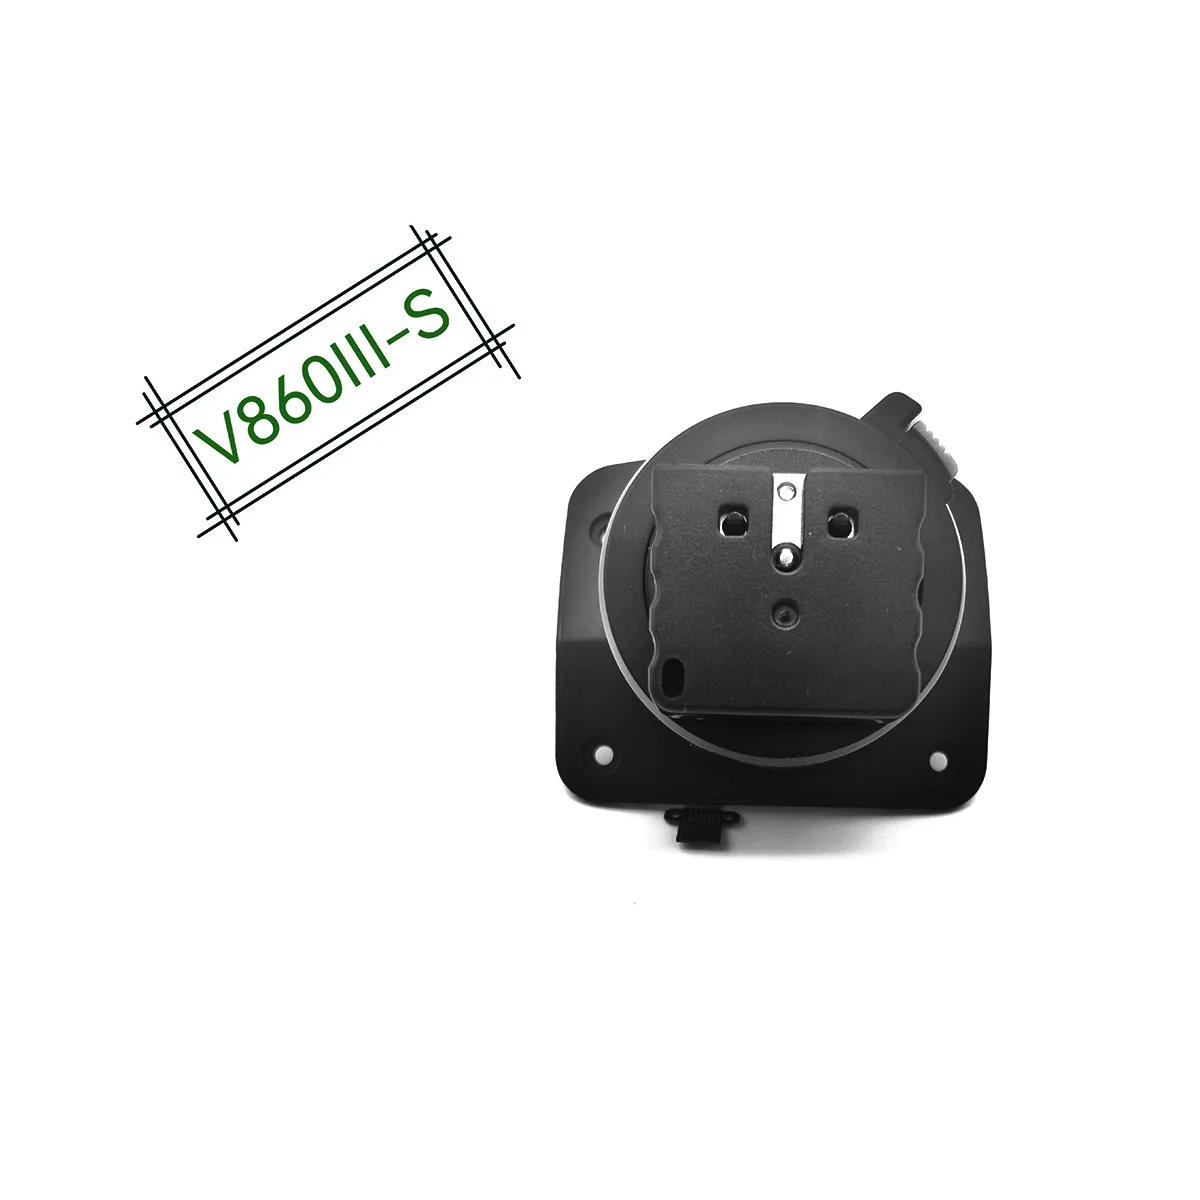 Для Godox Flash Upgrade Metal Version Hot Shoe Base Accessories V860III-S для камеры Sony